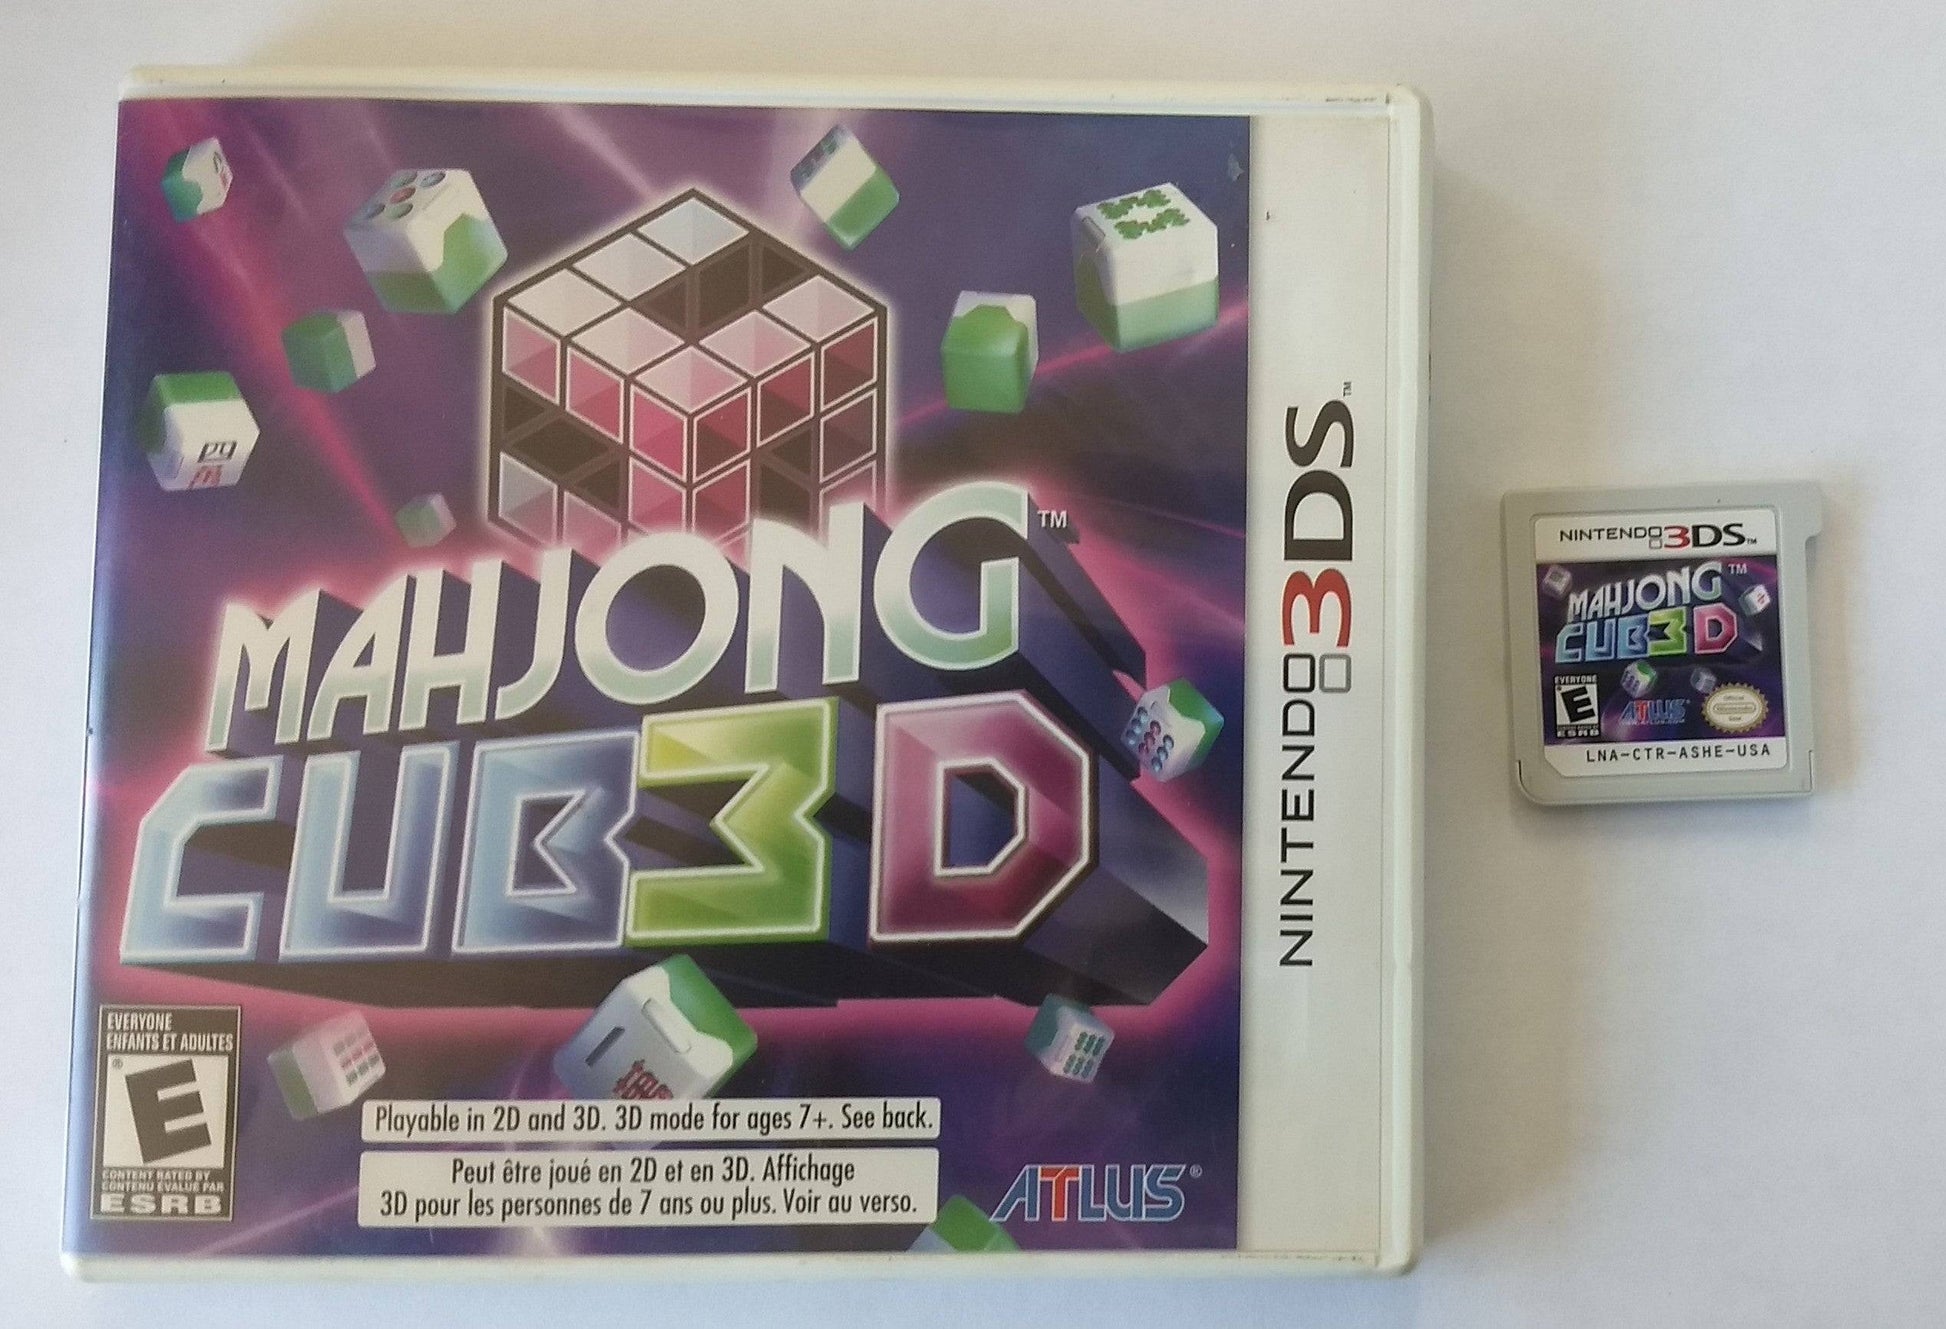 MAHJONG CUB3D (NINTENDO 3DS) - jeux video game-x